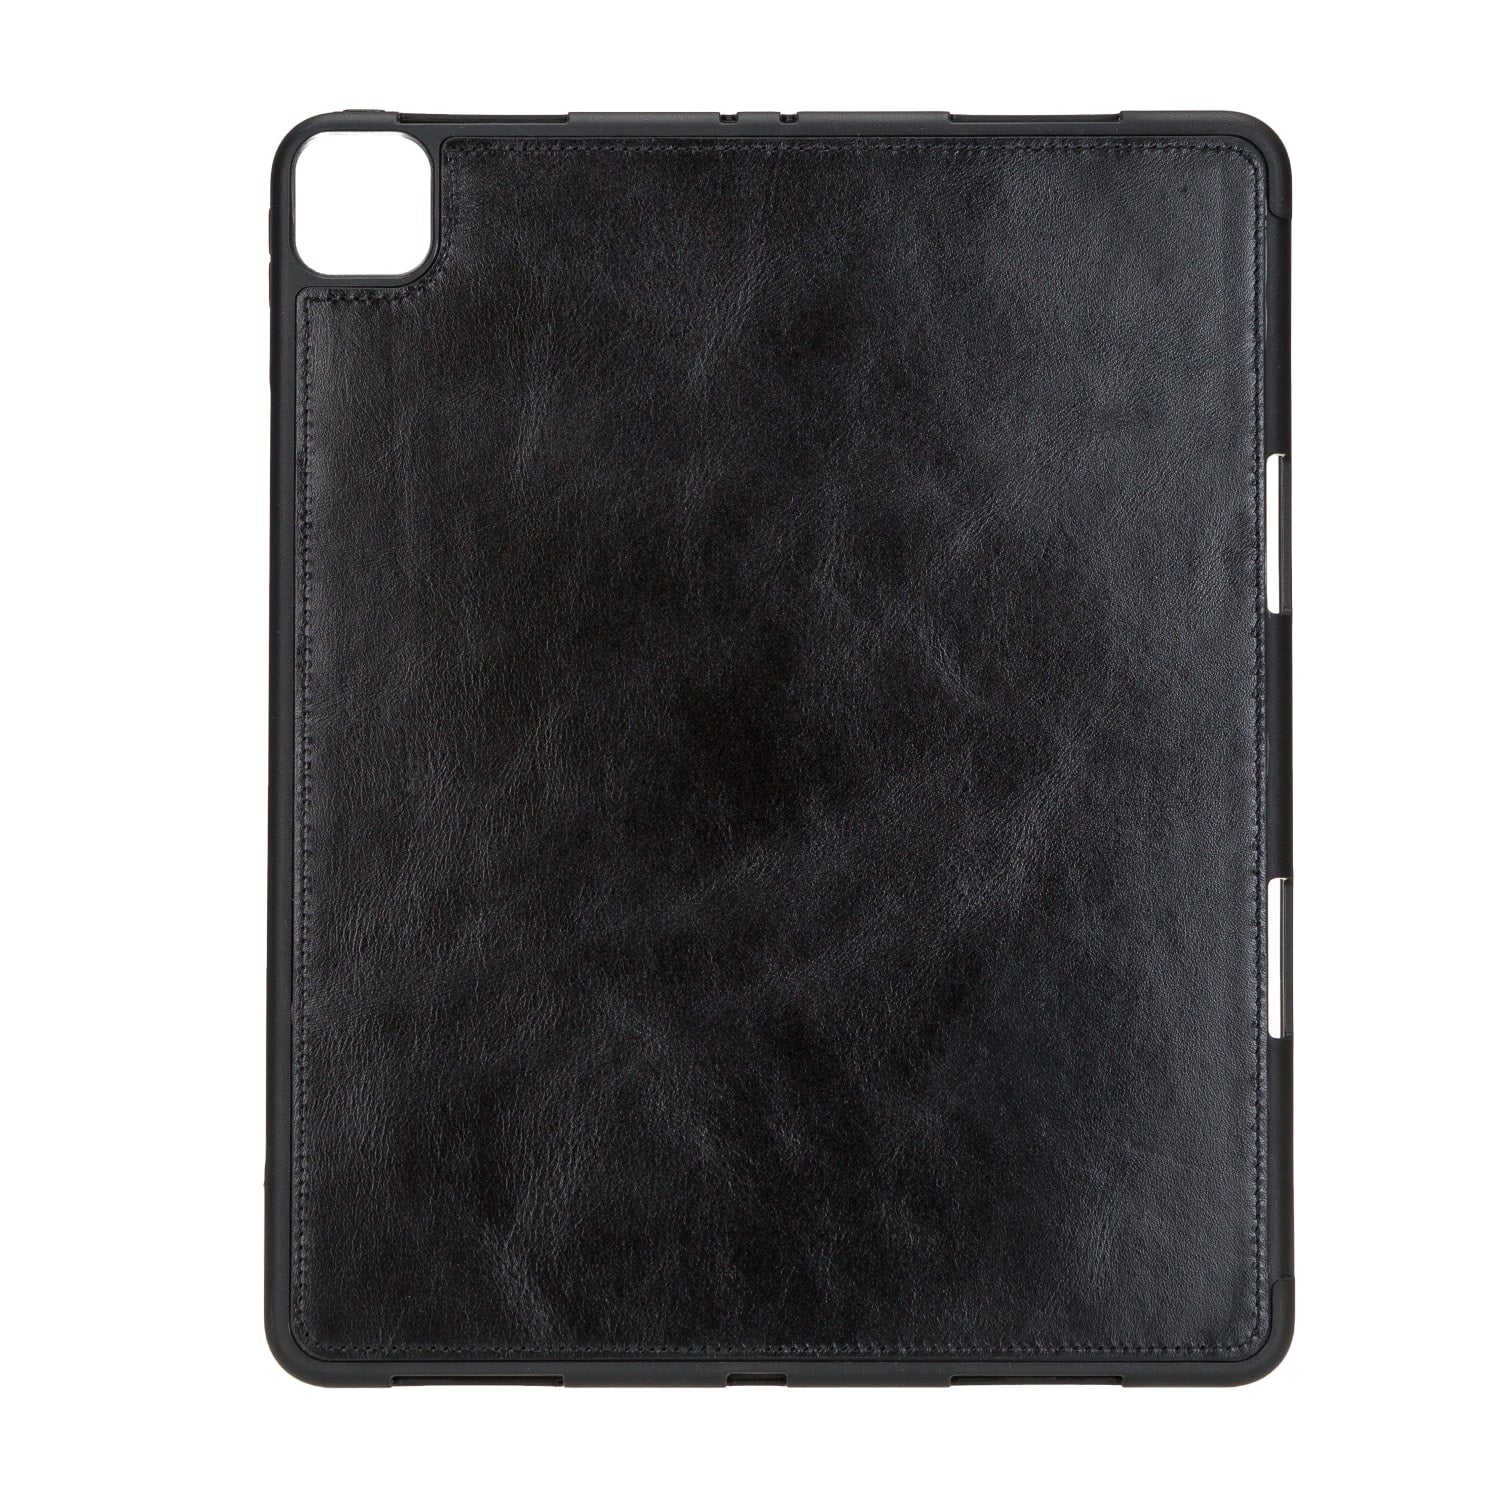 Black Leather iPad Pro 12.9 Inc Smart Folio Case with Apple Pen Holder - Bomonti - 5